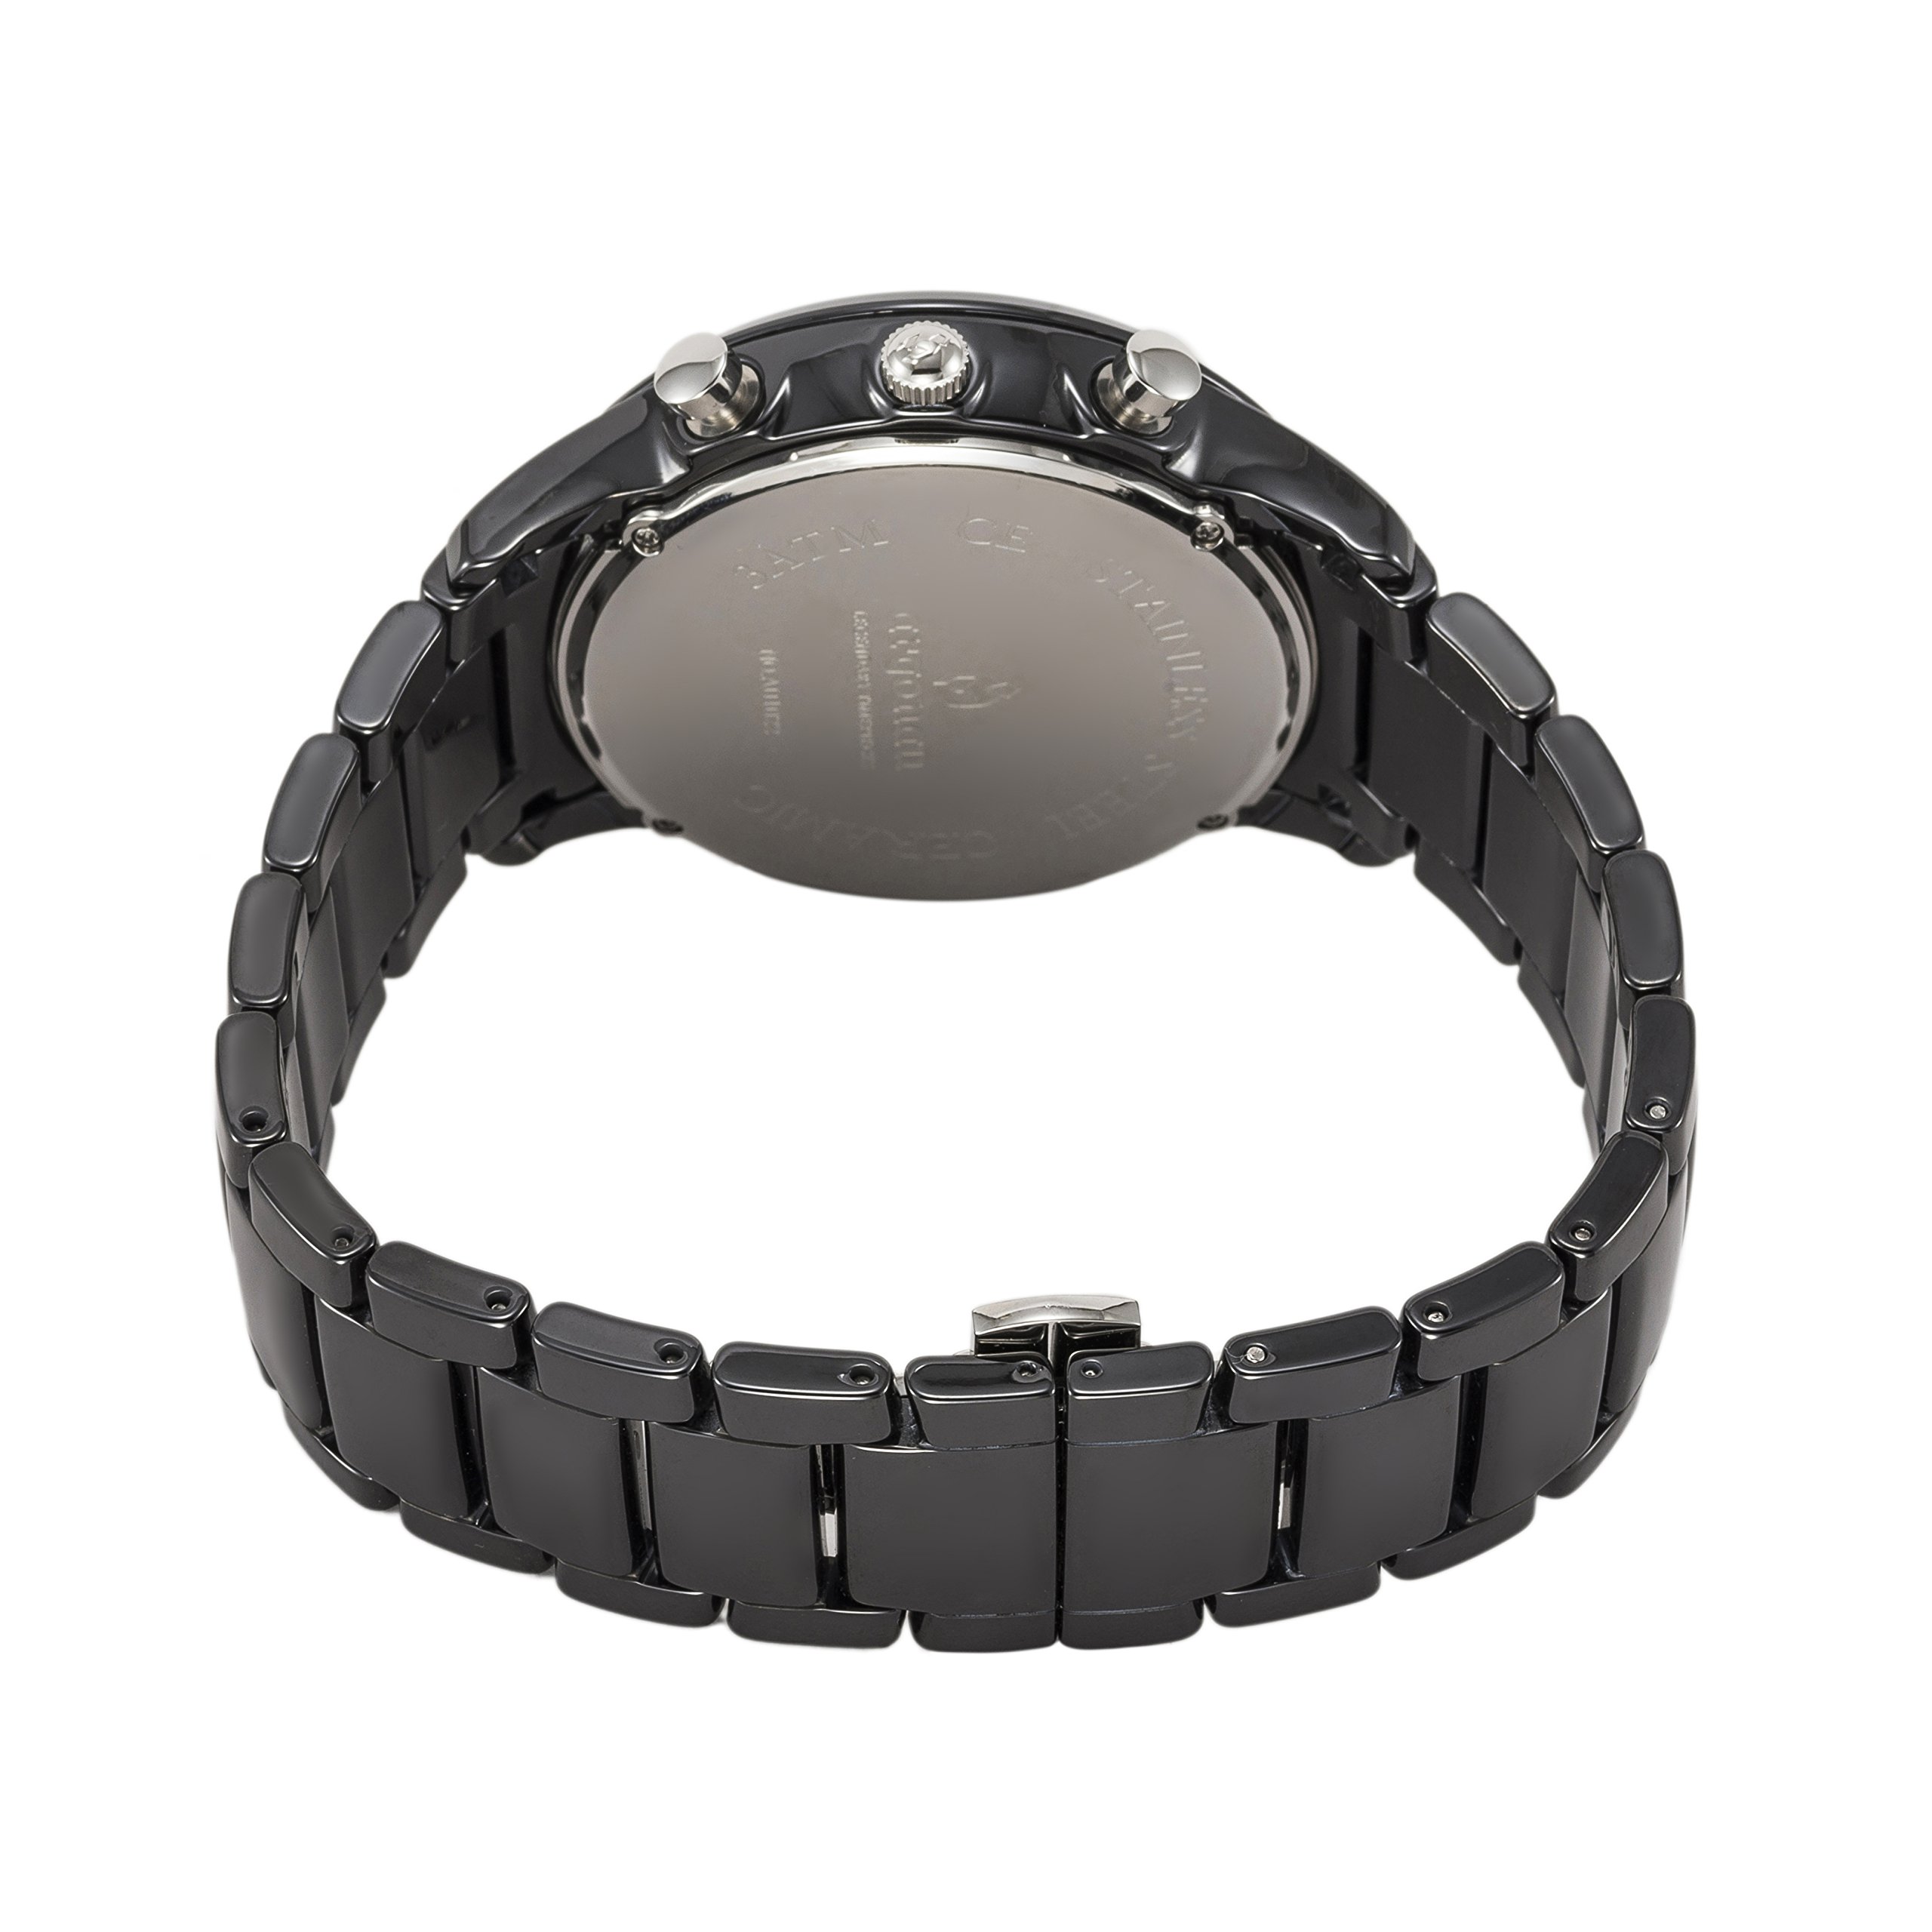 ARGONAU Unisex Erwachsene Analog Quarz Uhr mit Keramik Armband AU1022